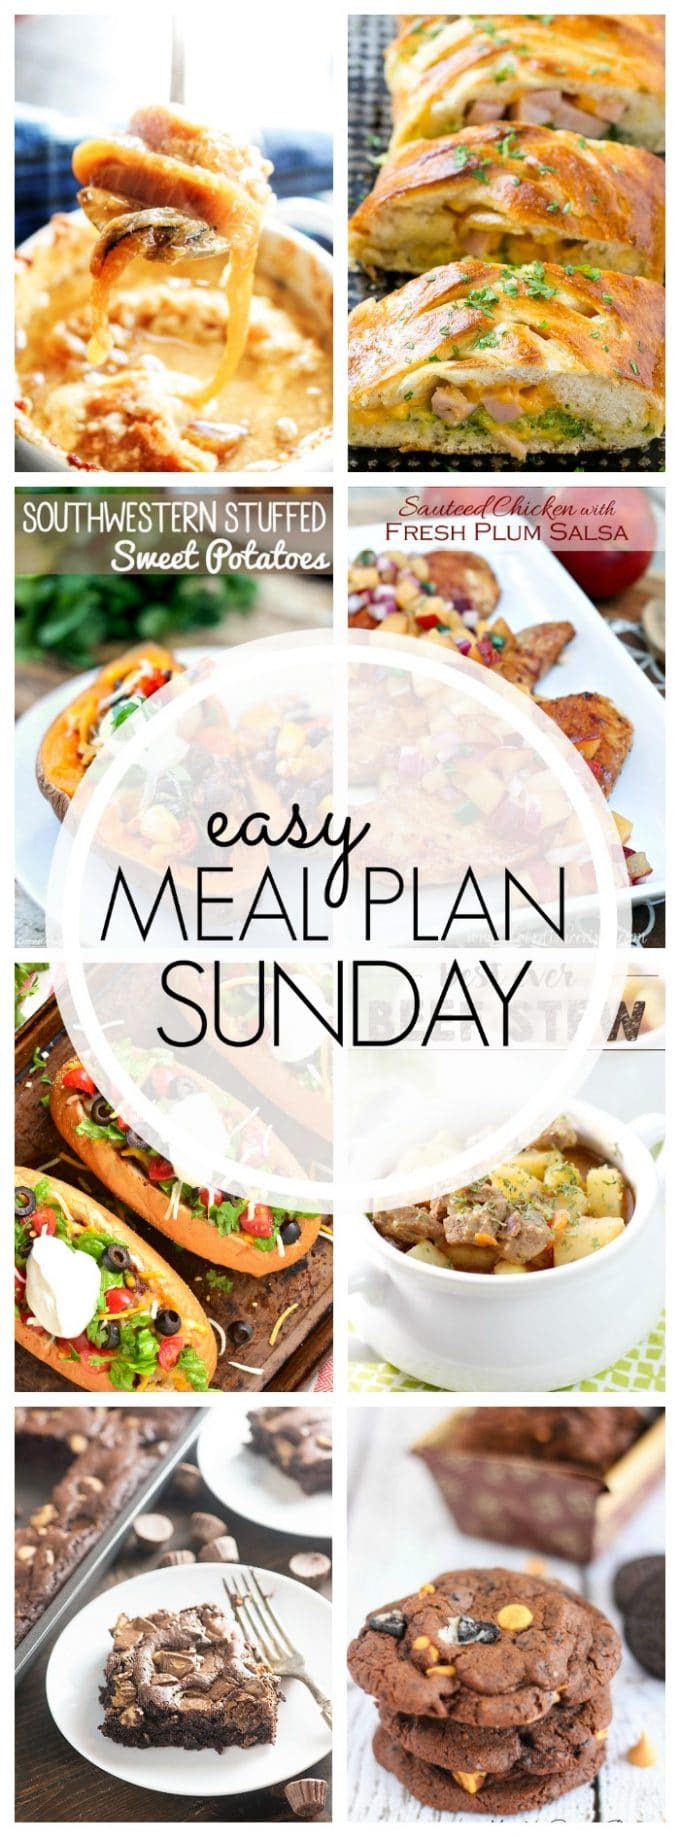 Easy Meal Plan Sunday - Week 79